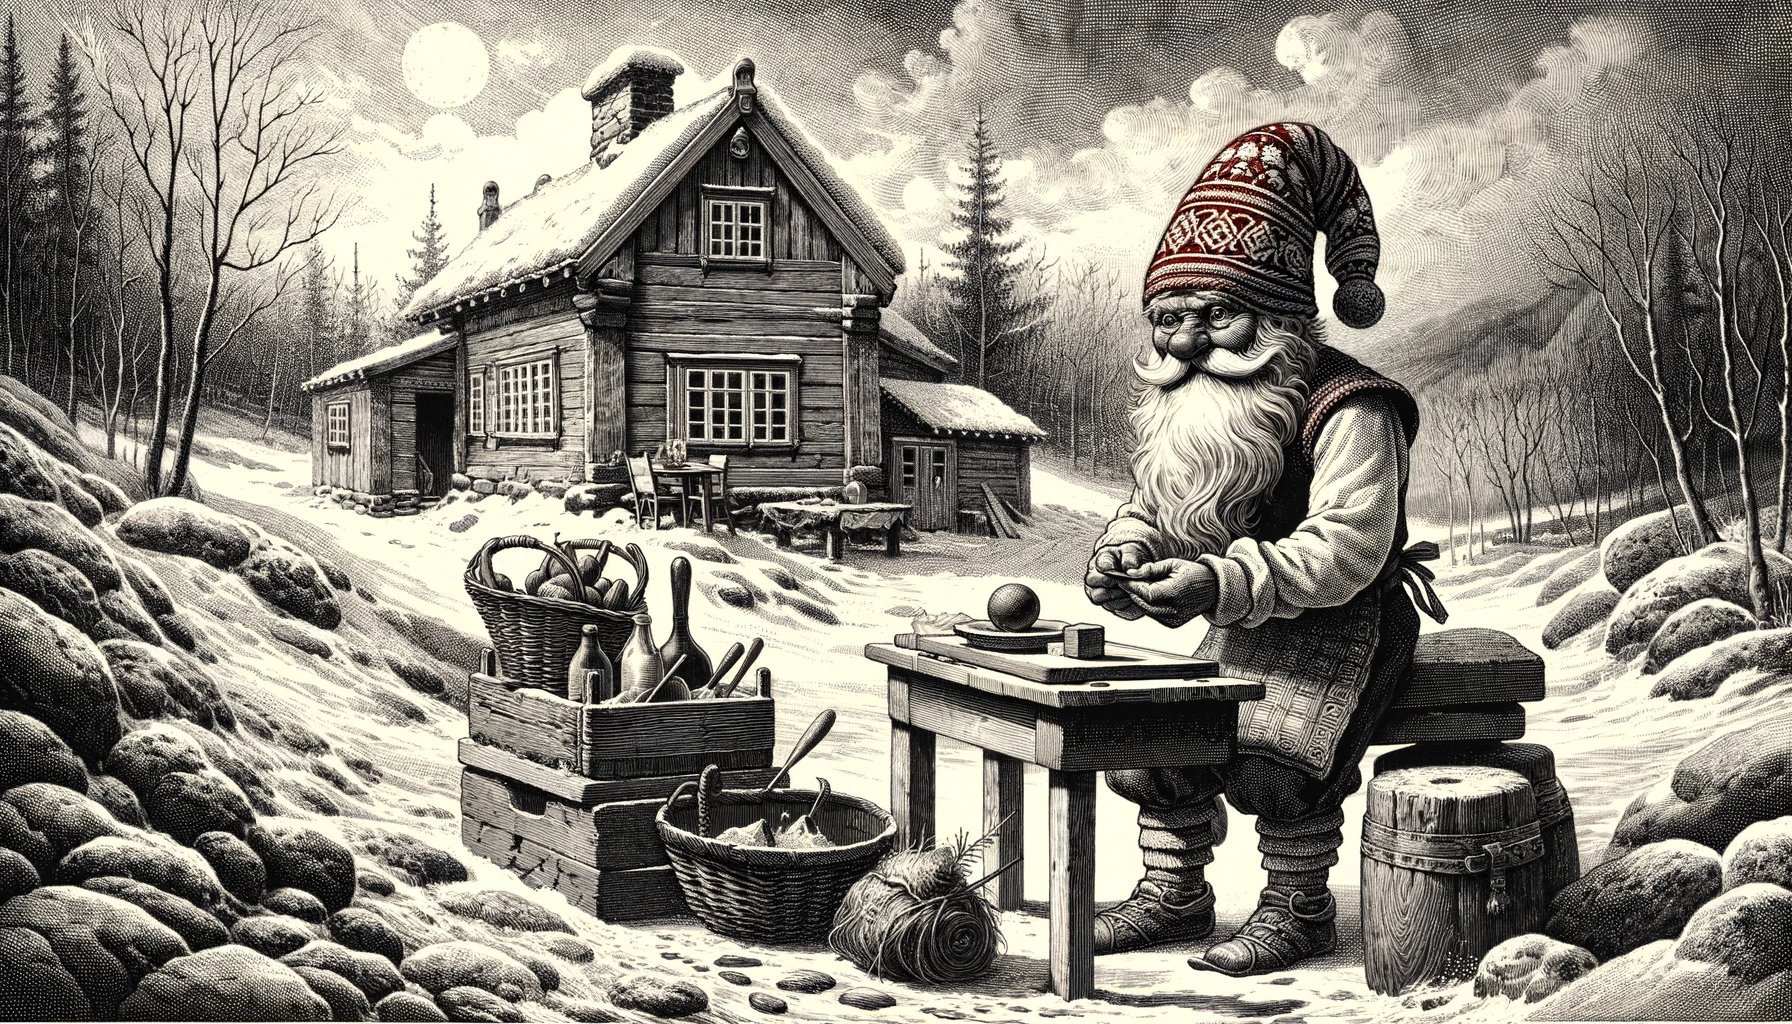 Illustration of a traditional Norwegian nisse. Image: Daniel Albert.